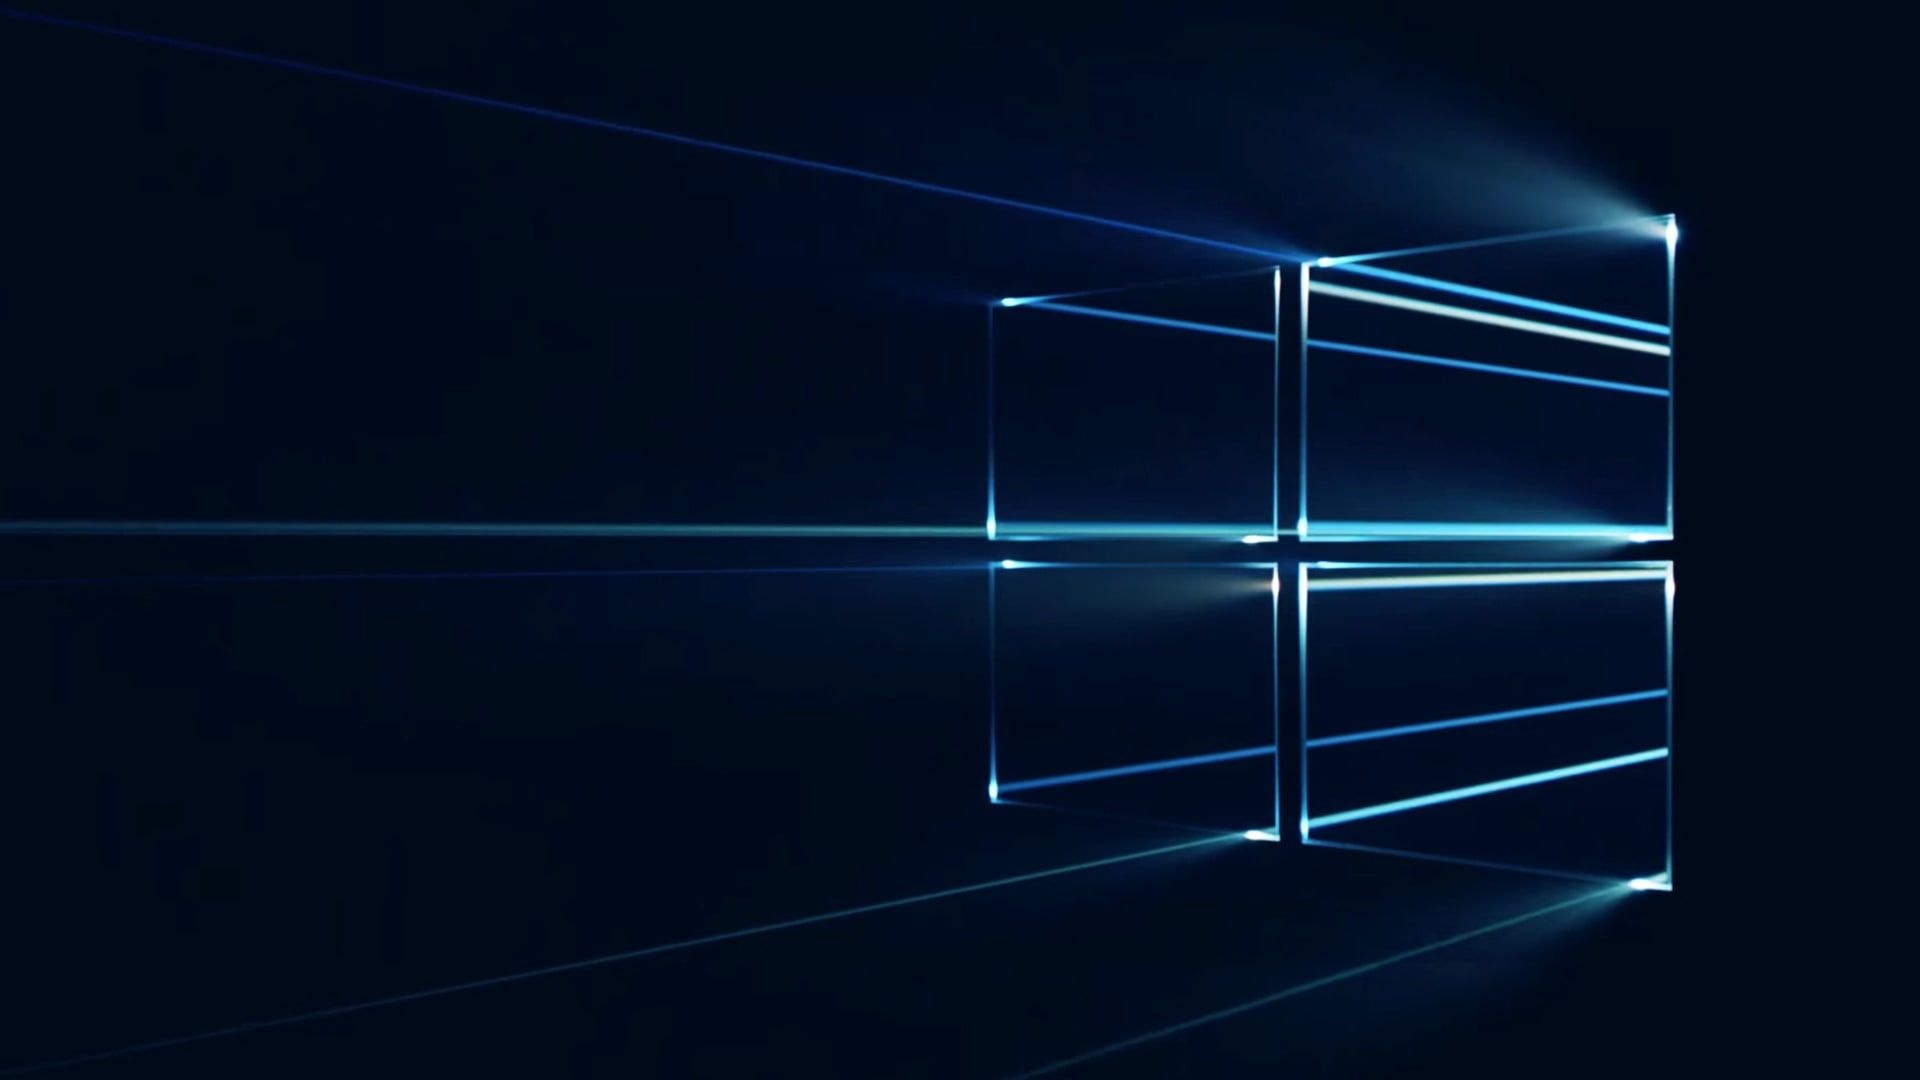 Microsoft: Windows 10, The direct successor to Windows 8.1, Steve Ballmer, Bill Gates. 1920x1080 Full HD Wallpaper.